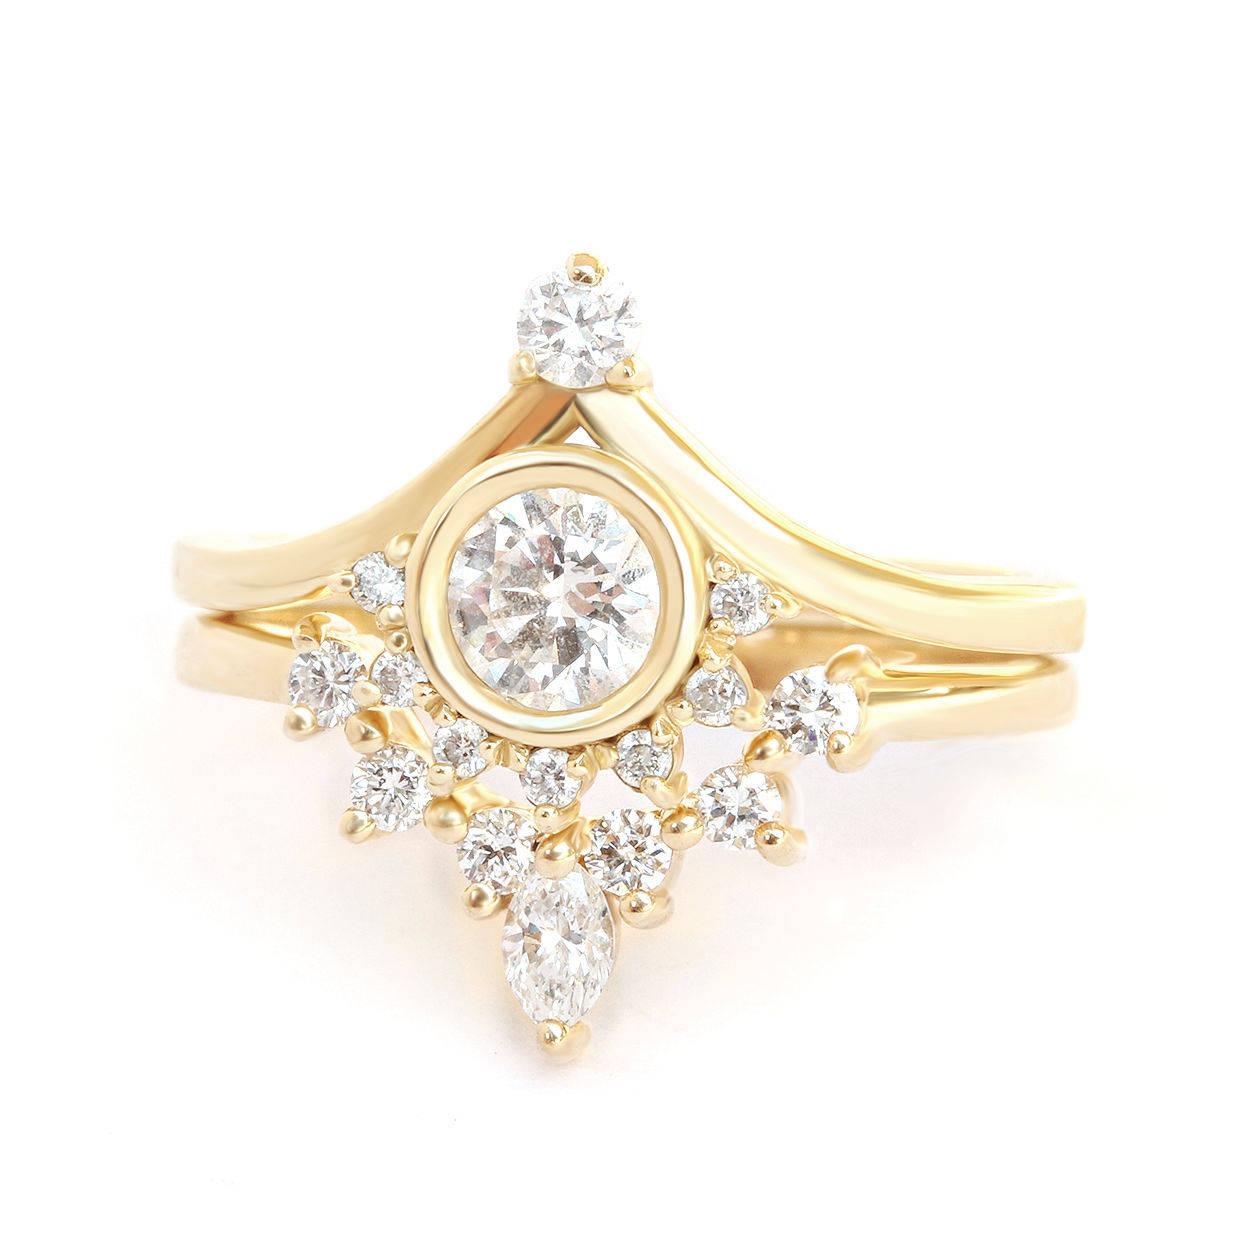 Contemporary Round Diamond Unique Engagement Rings Set - 